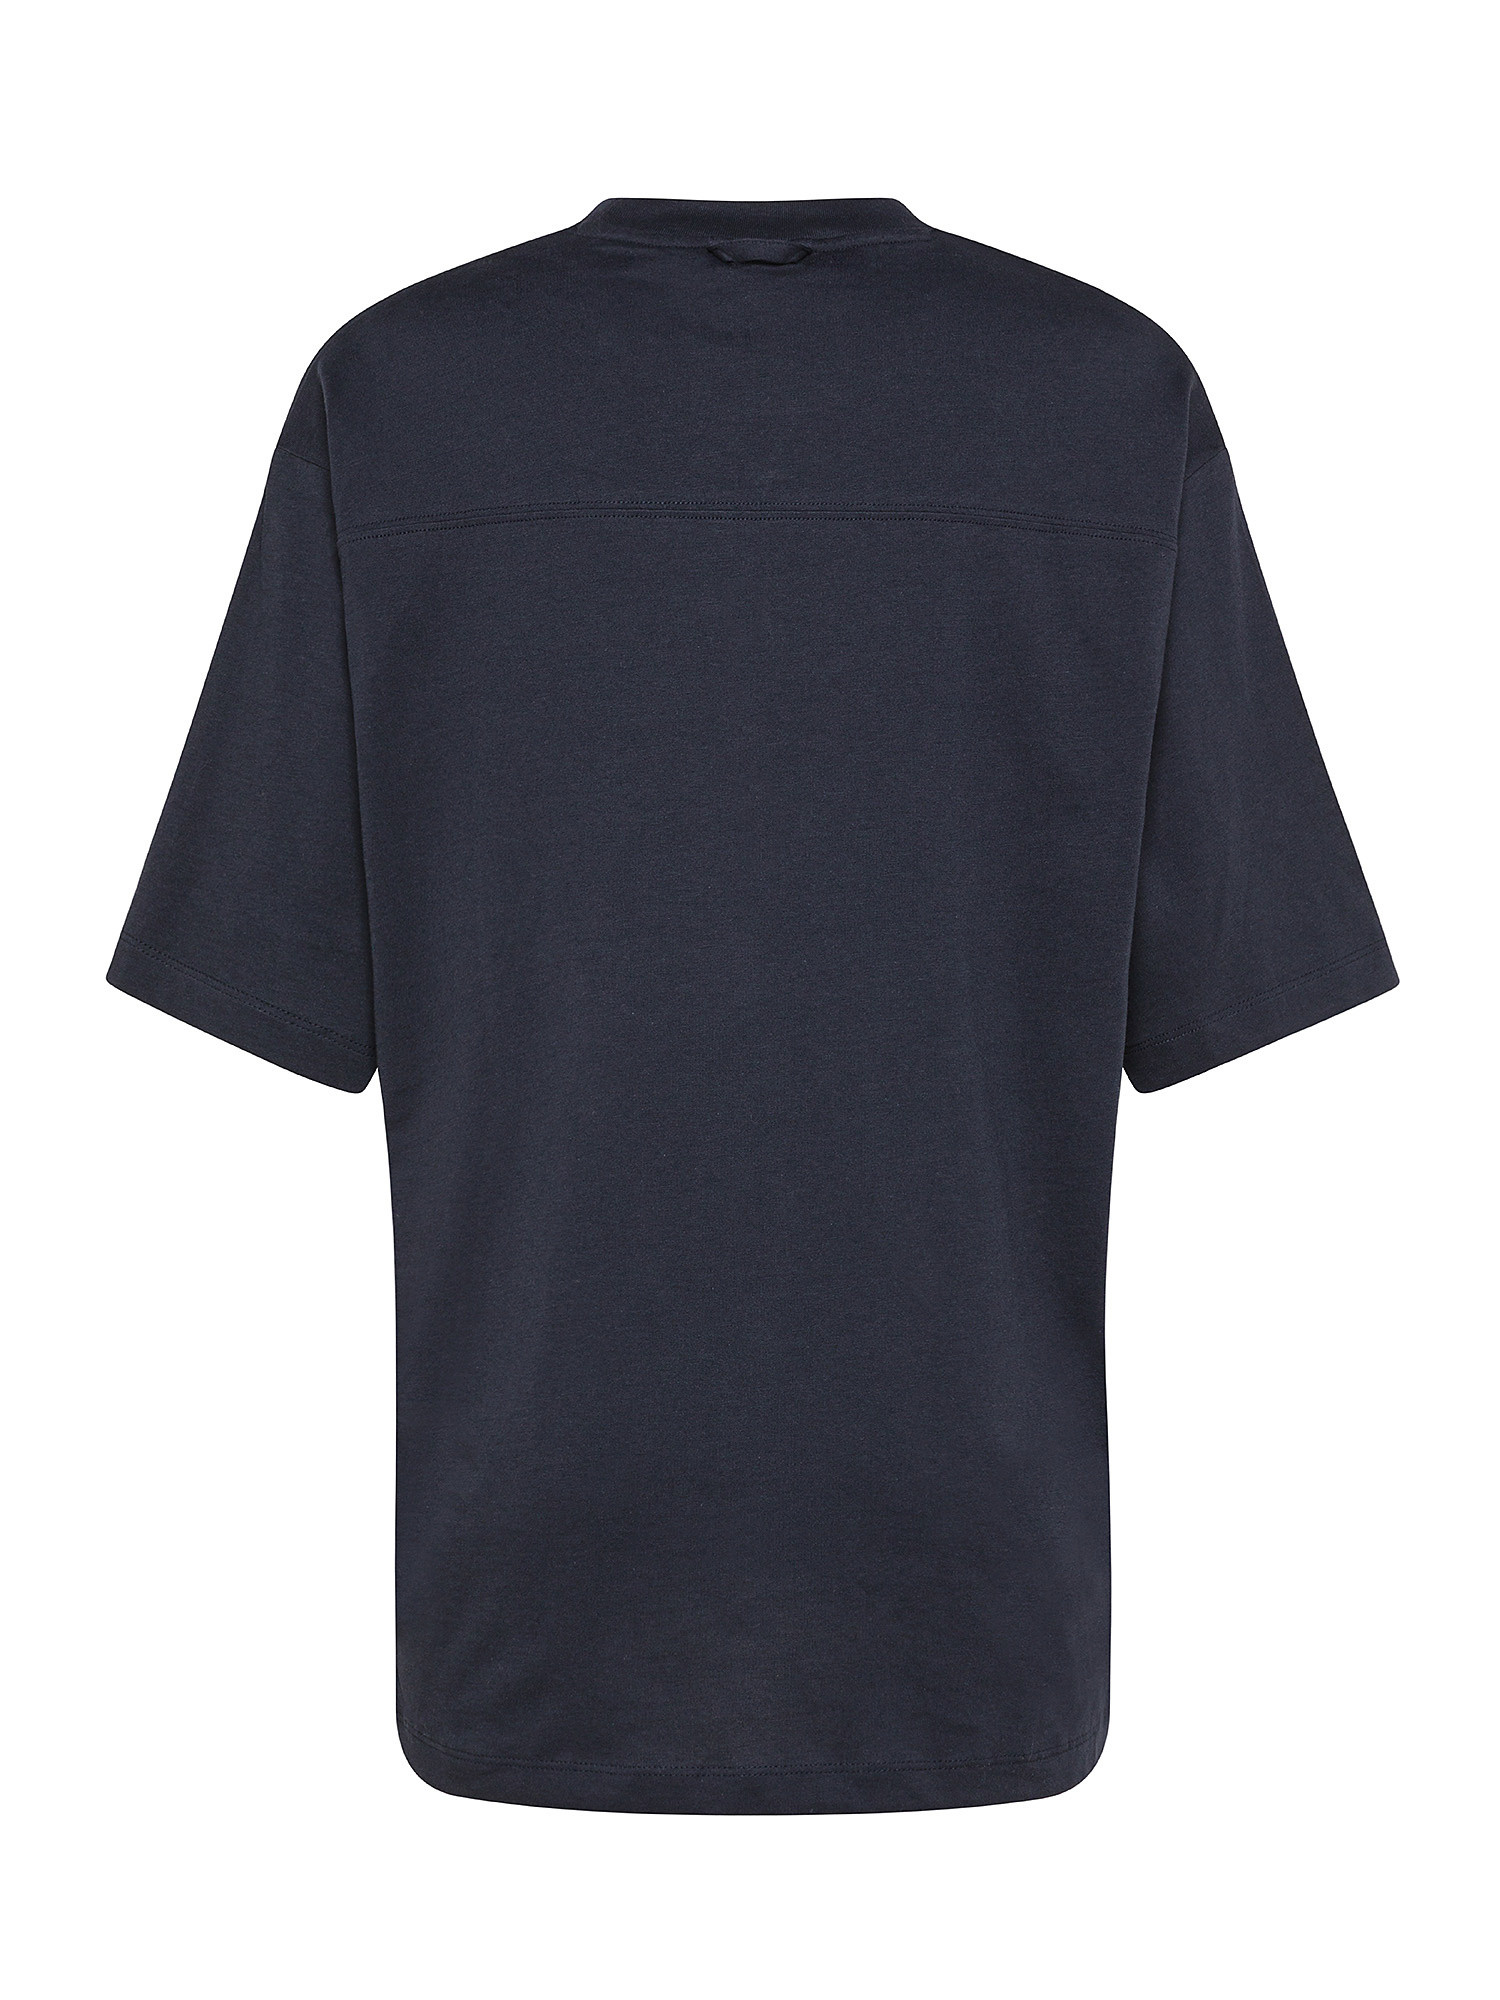 Armani Exchange - T-shirt girocollo in cotone, Blu scuro, large image number 1